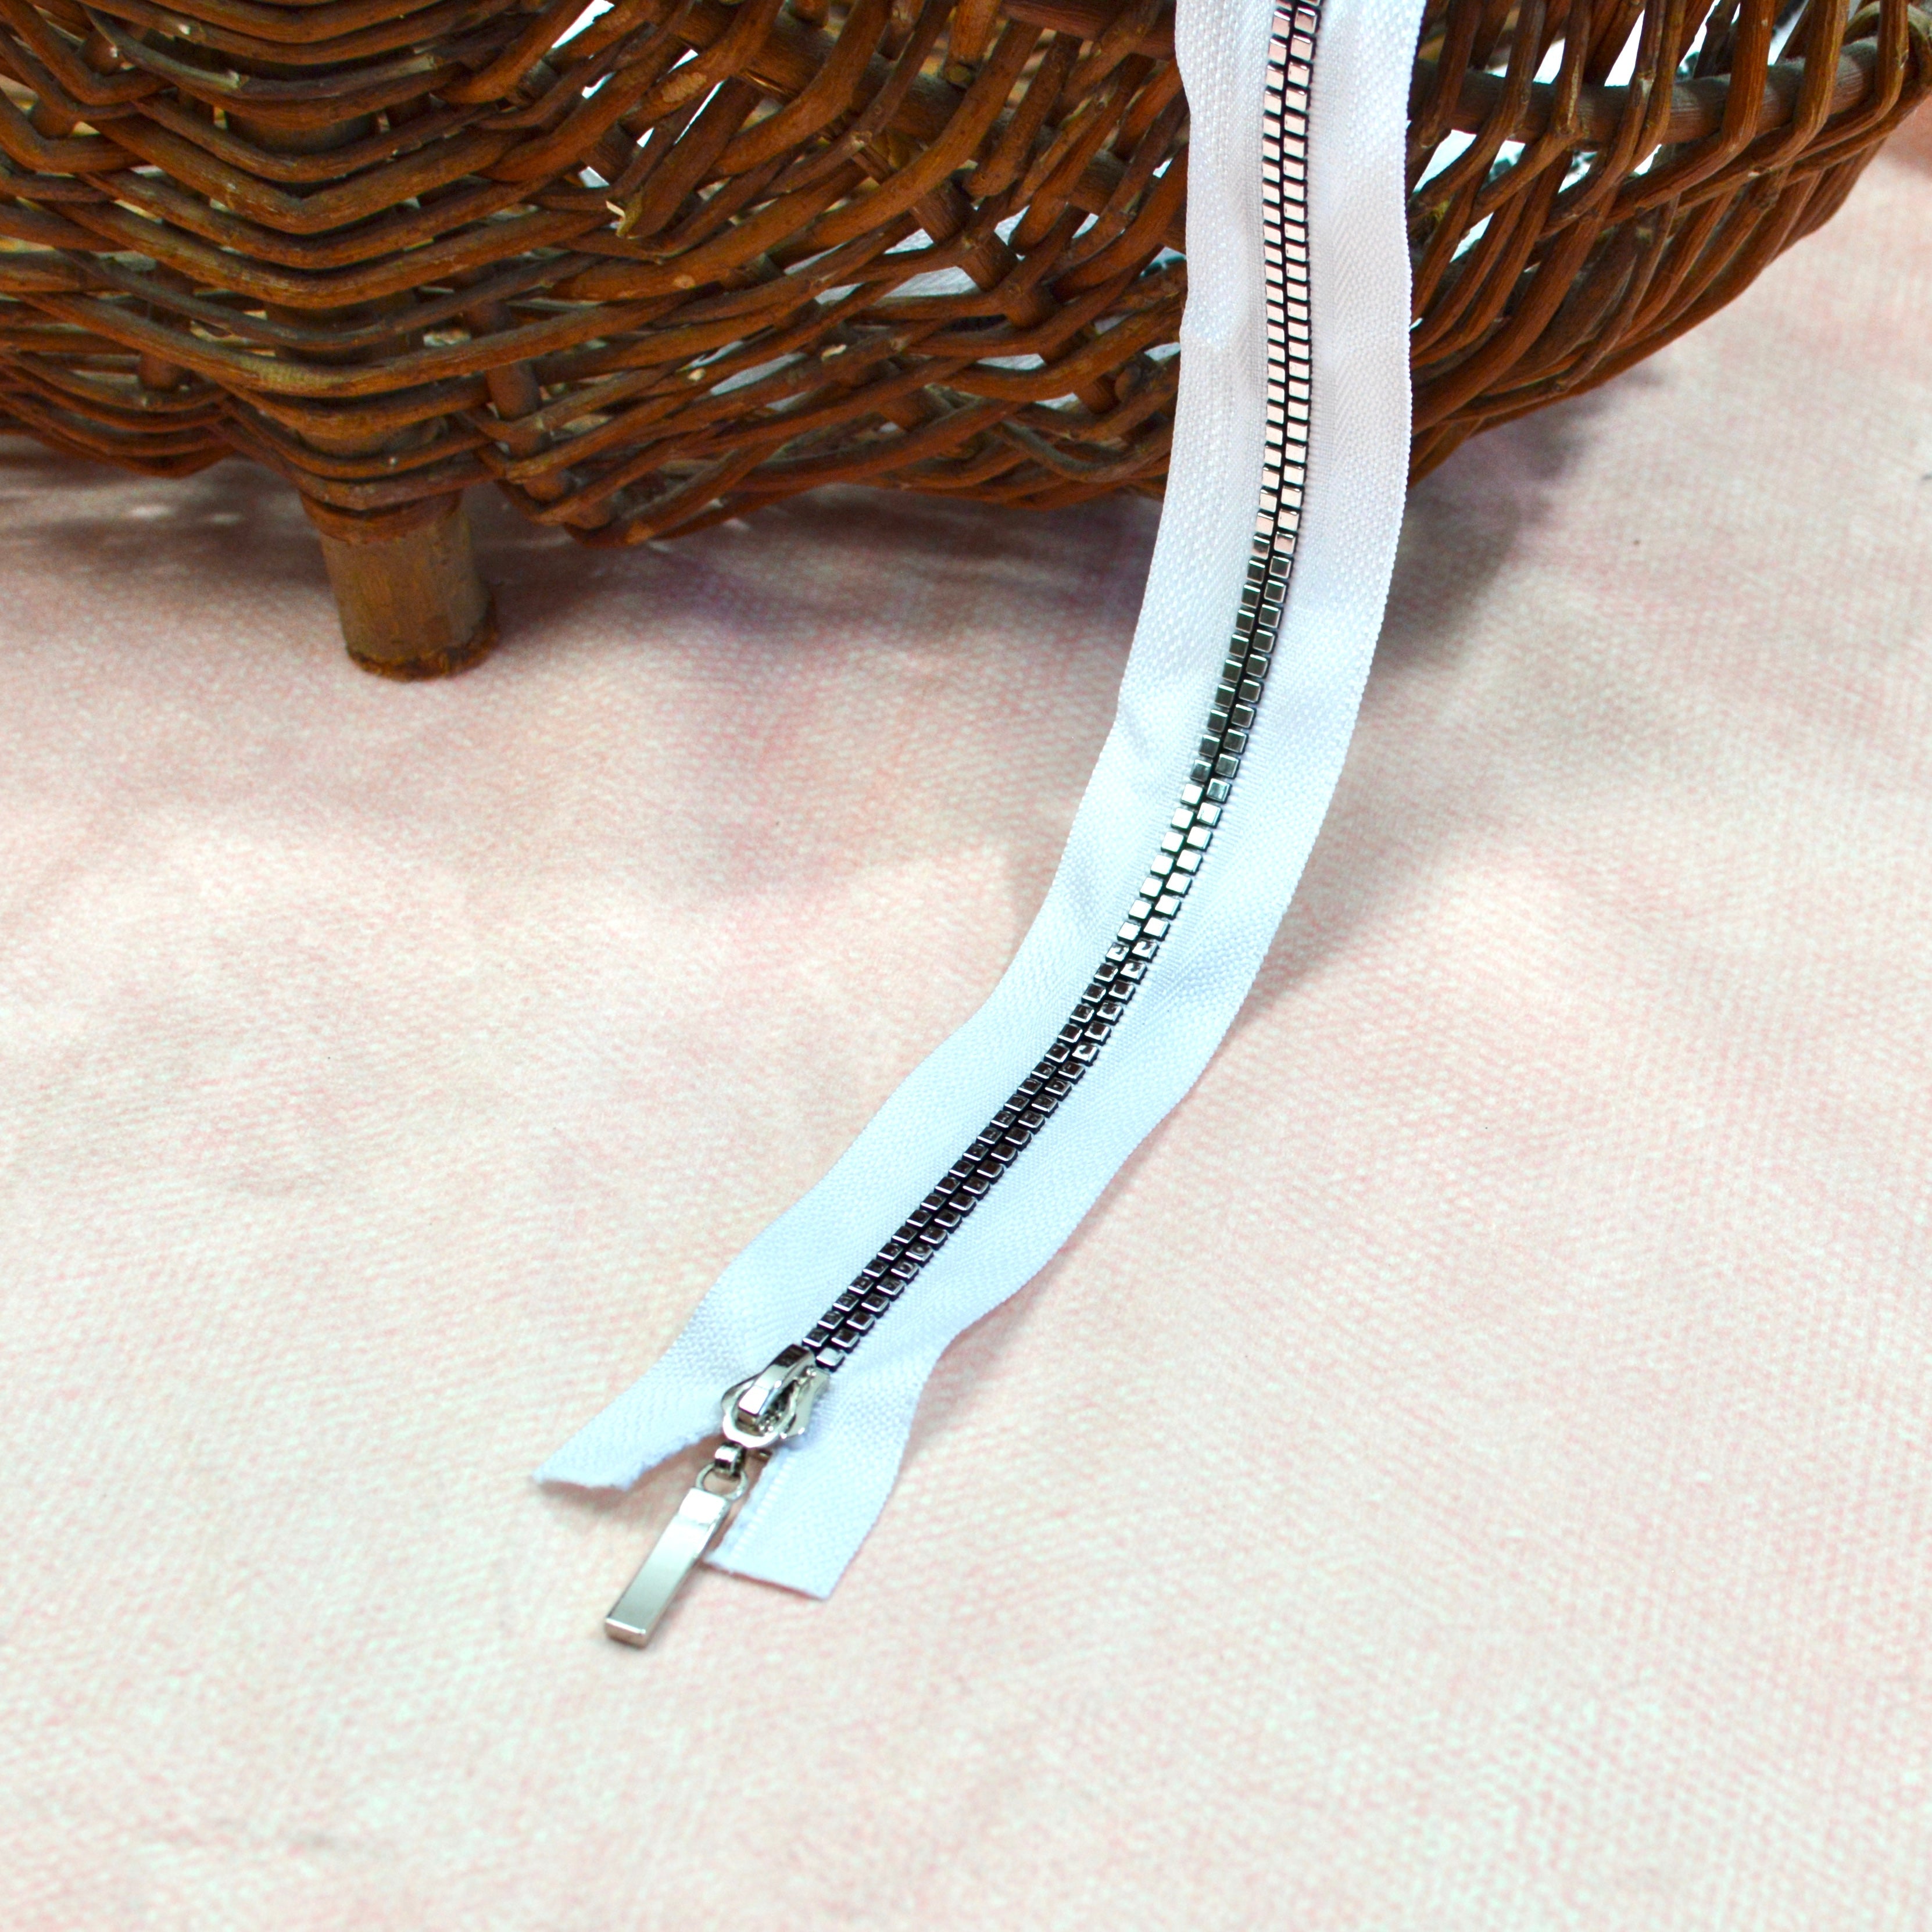 Jacken Reißverschluss 80 cm weiß silber Vierkantzähne Stück poshpinks